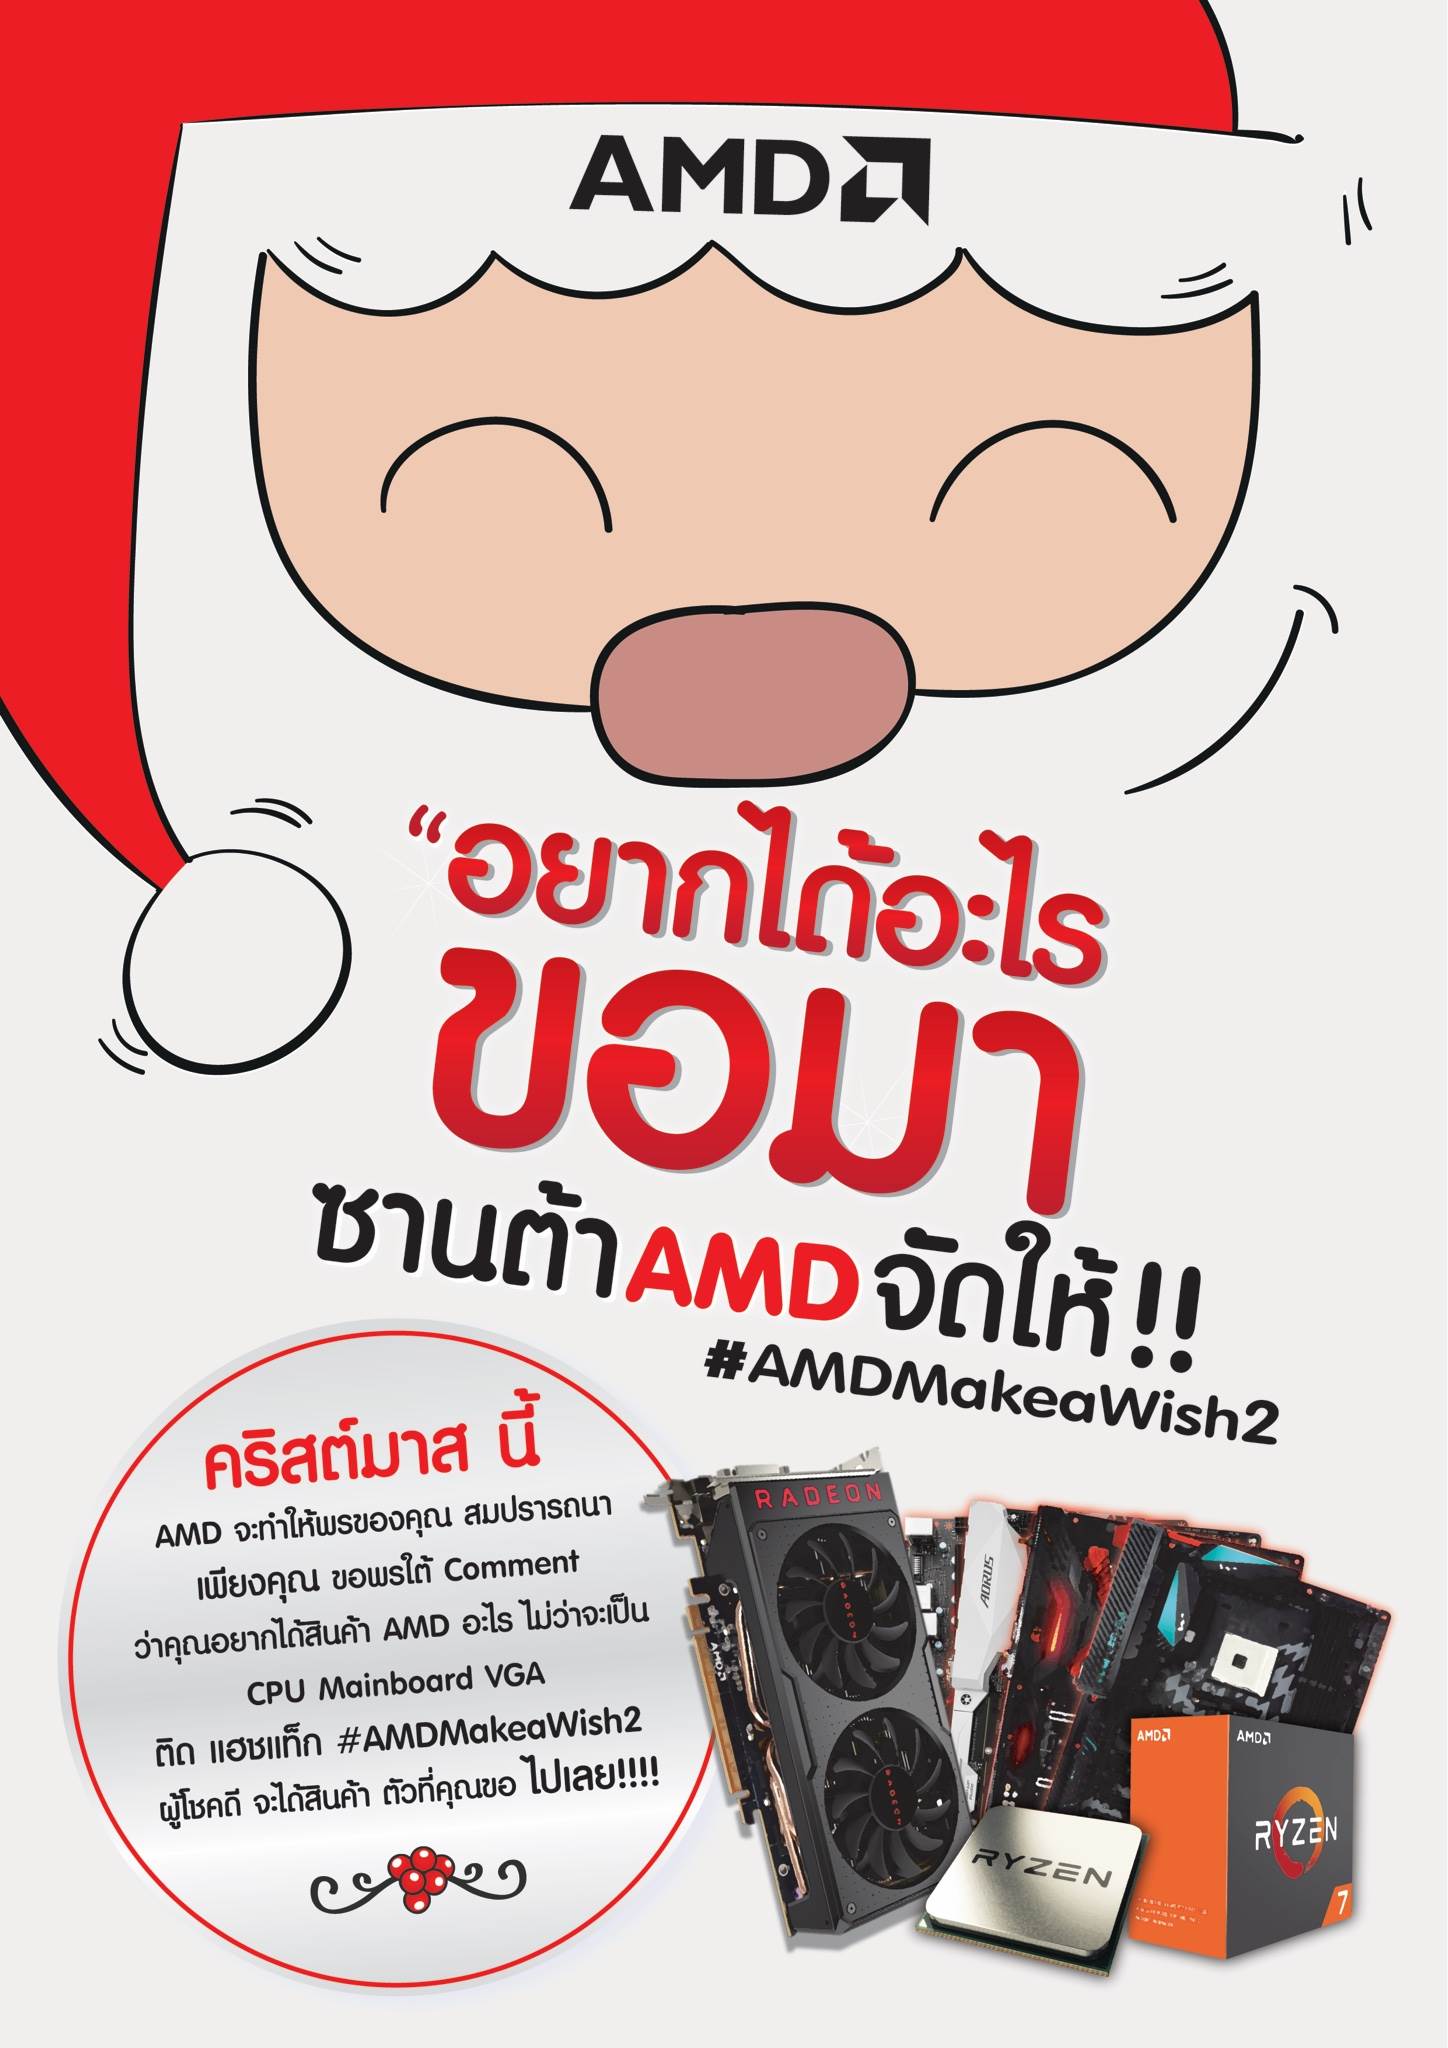 20 12 2017 AMD Make a wish ครั้งที่ 2 อยากได้อะไรขอมา ซานต้า AMD จัดให้!! วันนี้ ถึง 25 ธันวาคมนี้ เท่านั้น